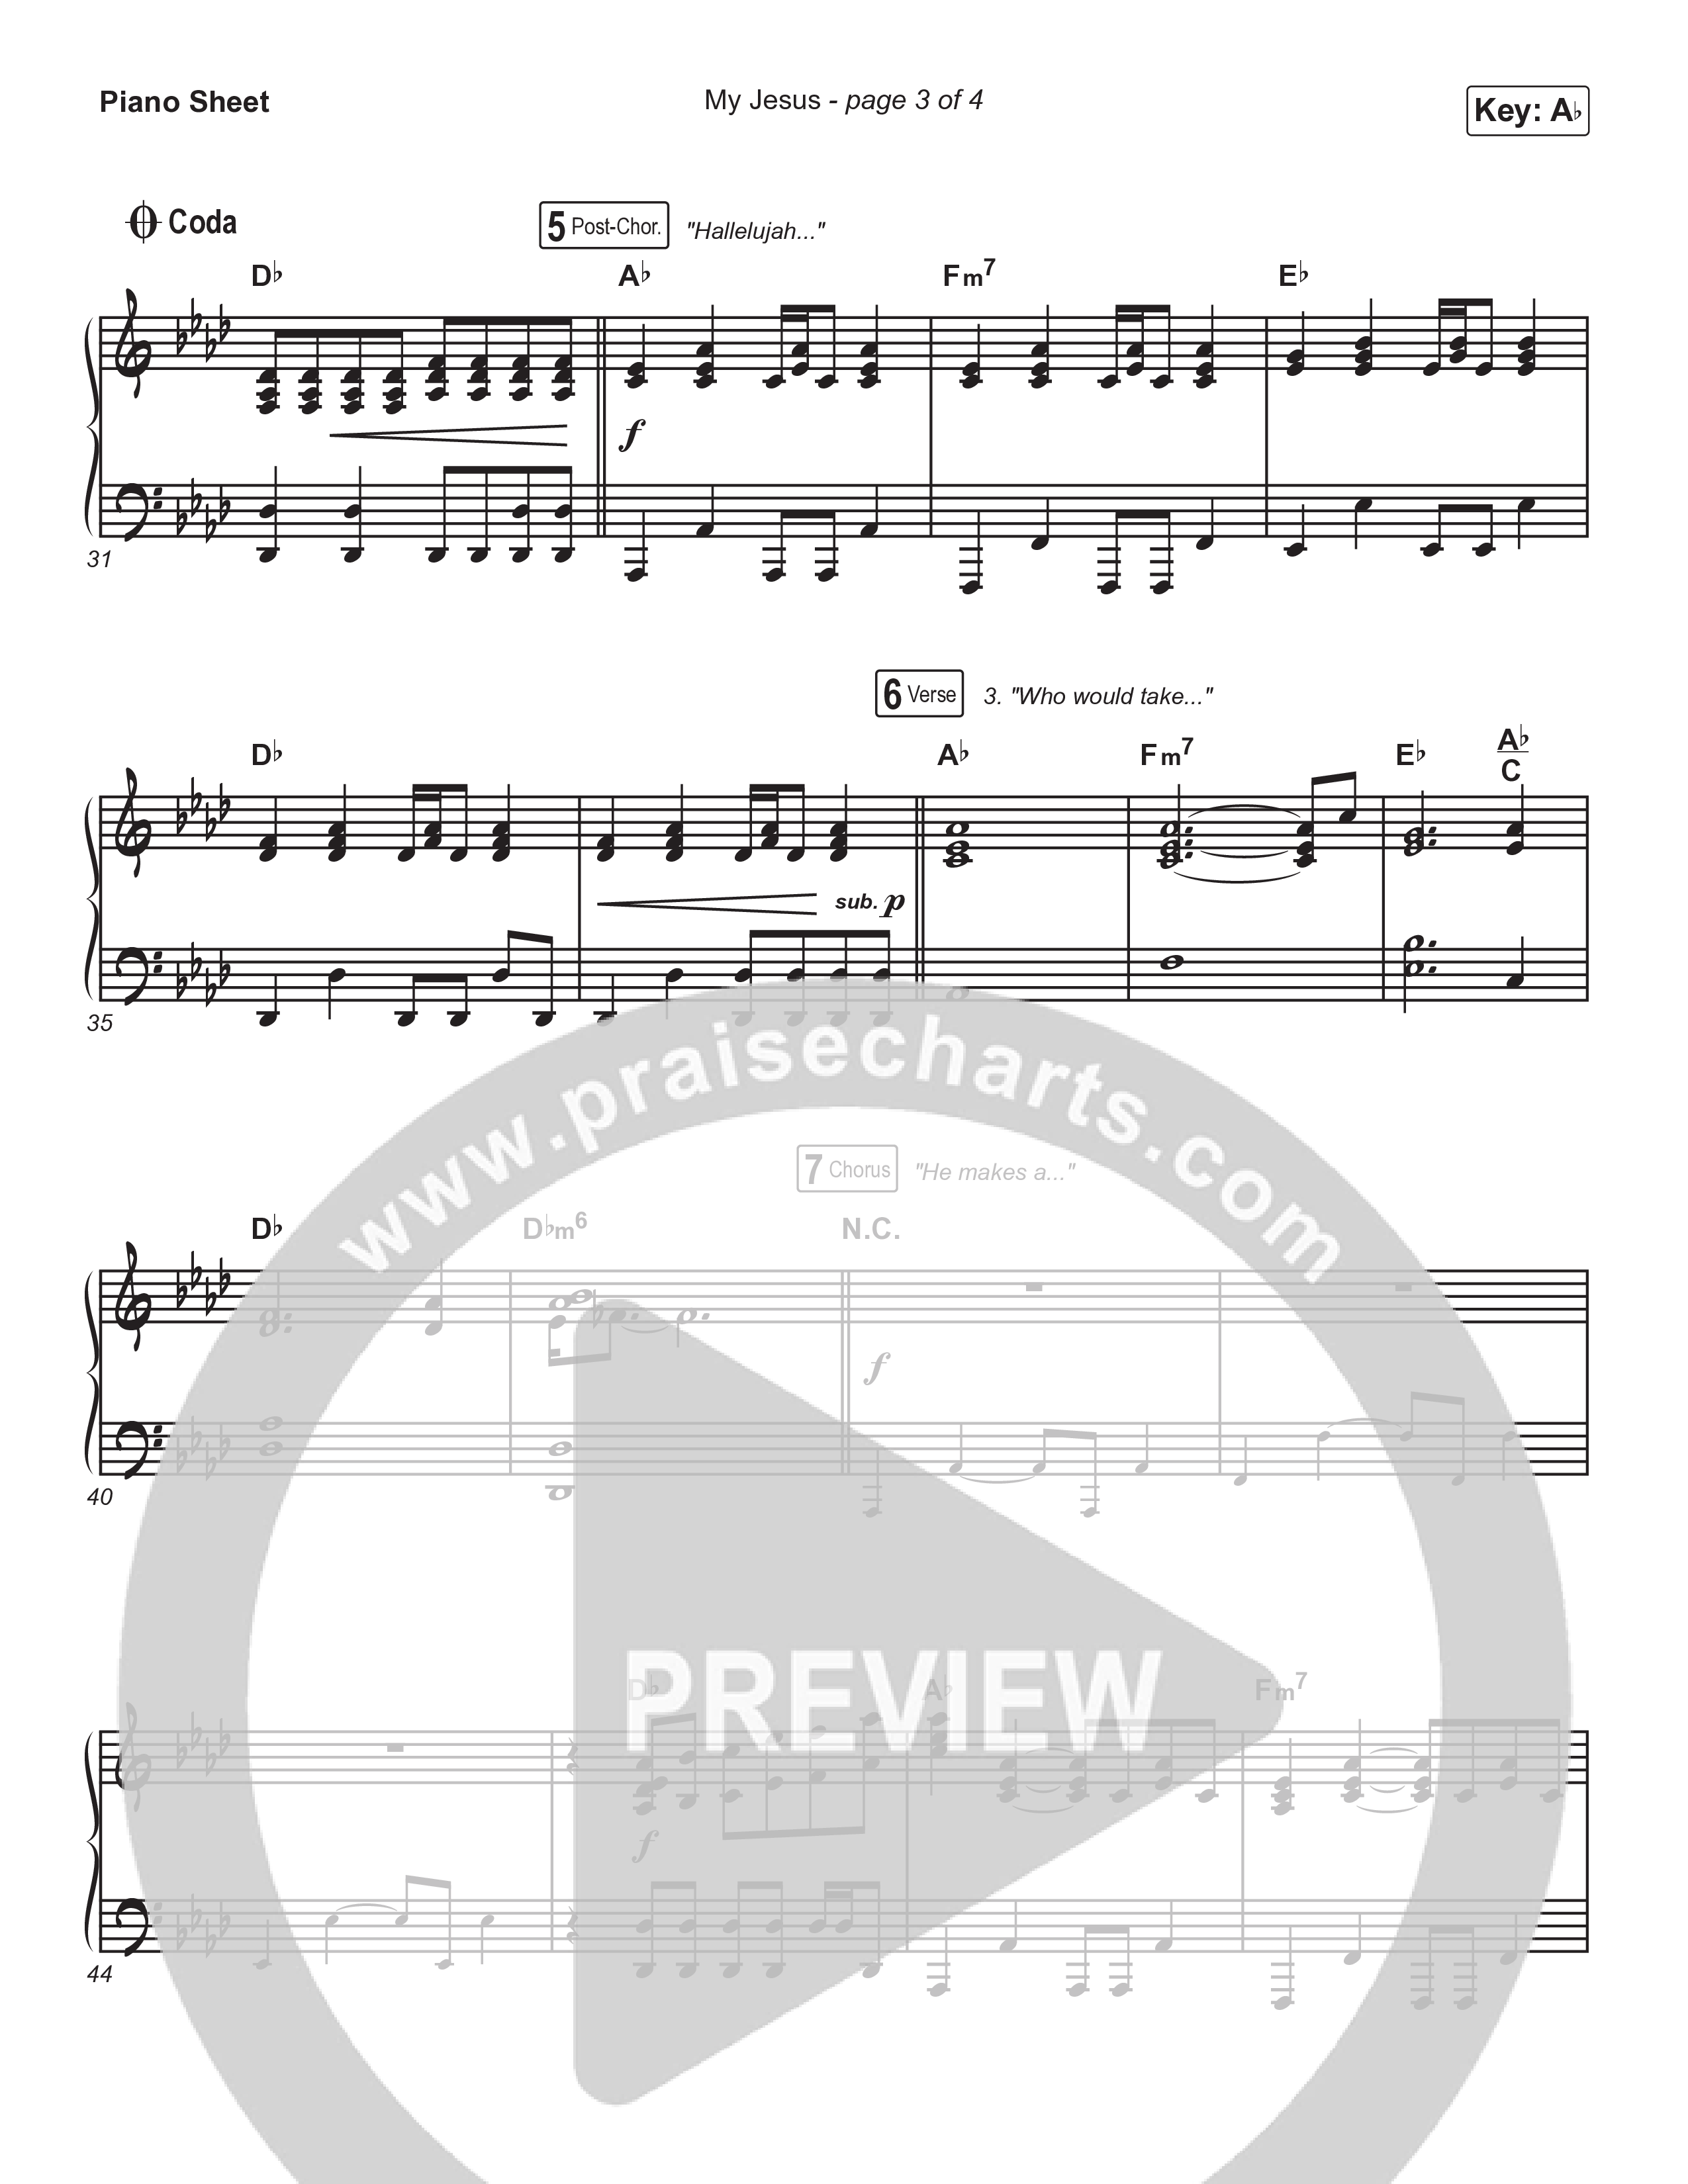 My Jesus (Worship Choir SAB) Piano Sheet (Anne Wilson / Arr. Luke Gambill)